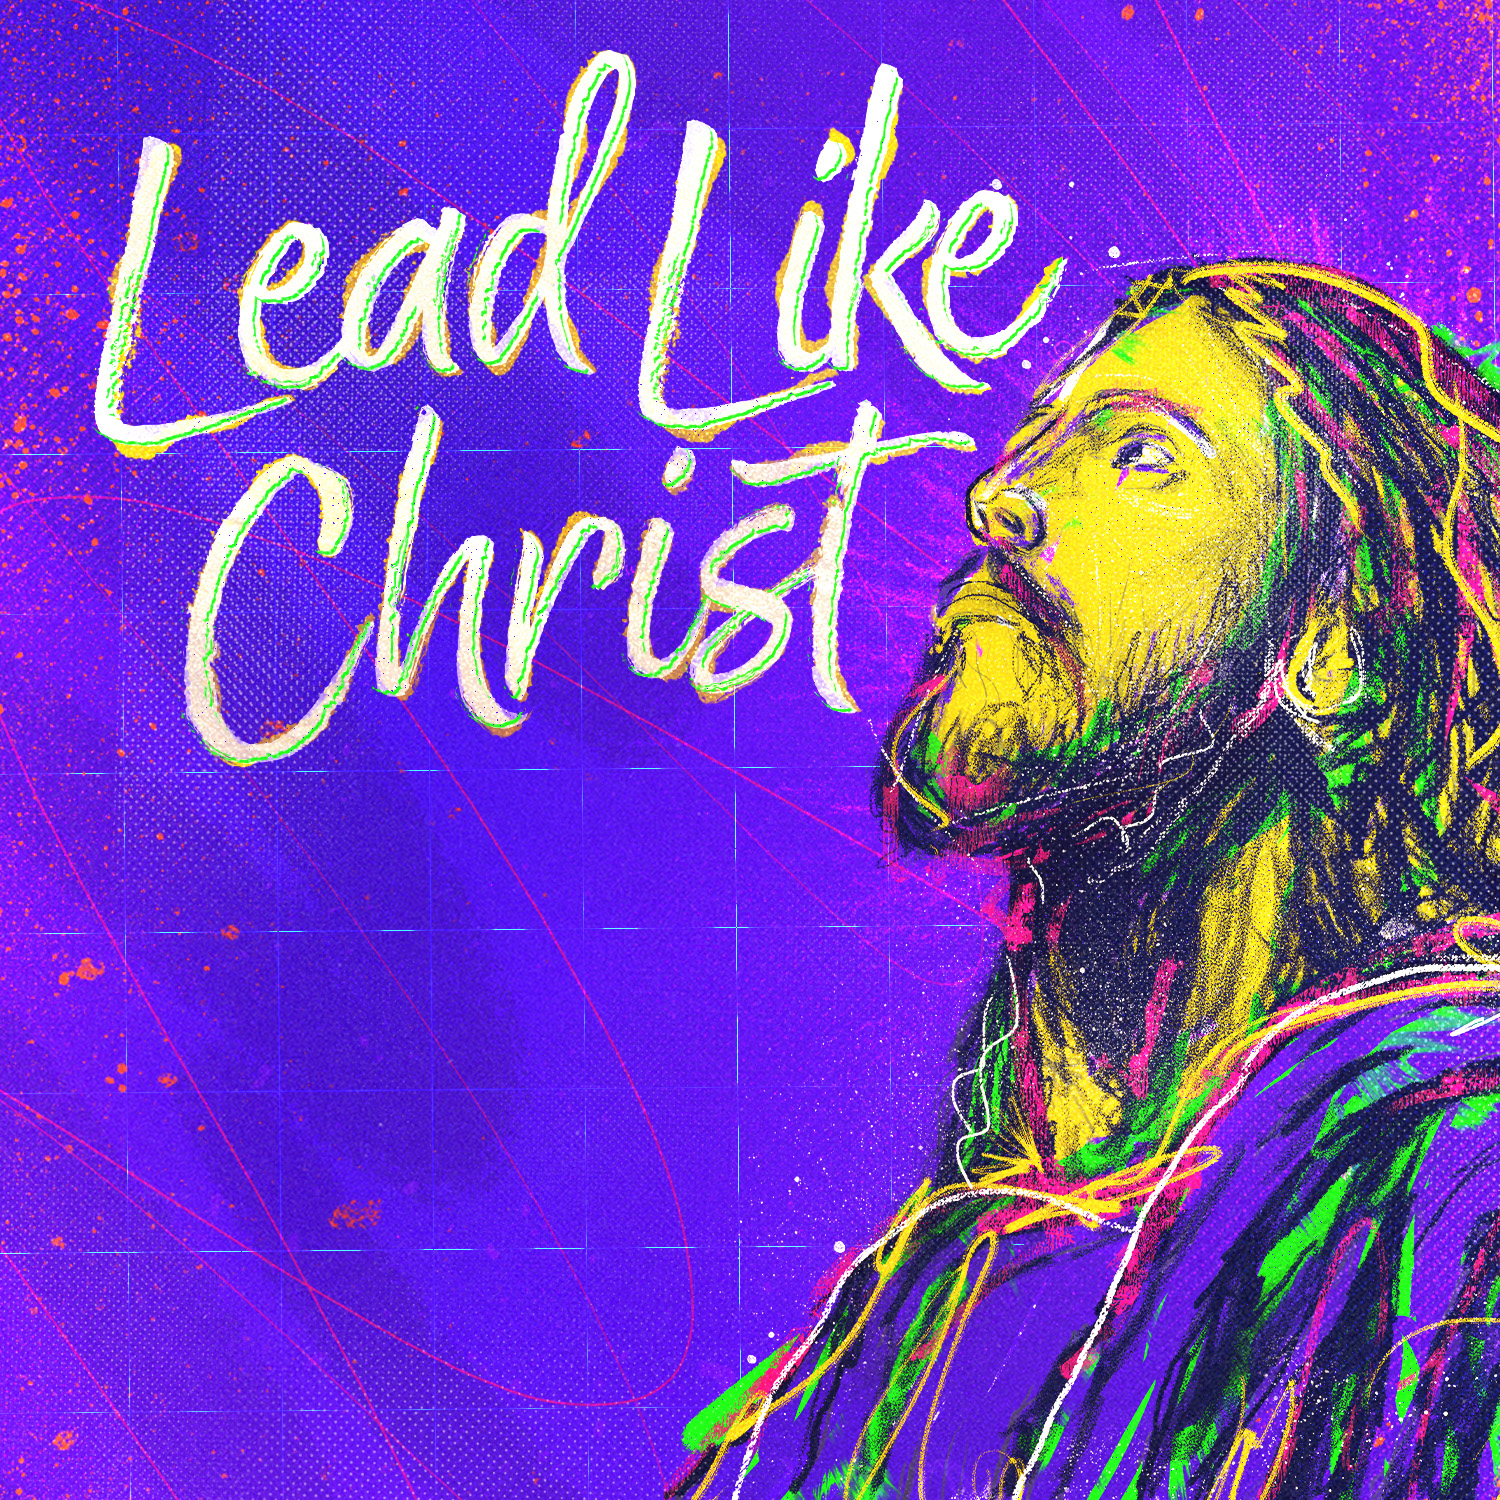 Lead Like Christ - Week 1 - The Light of the Leader